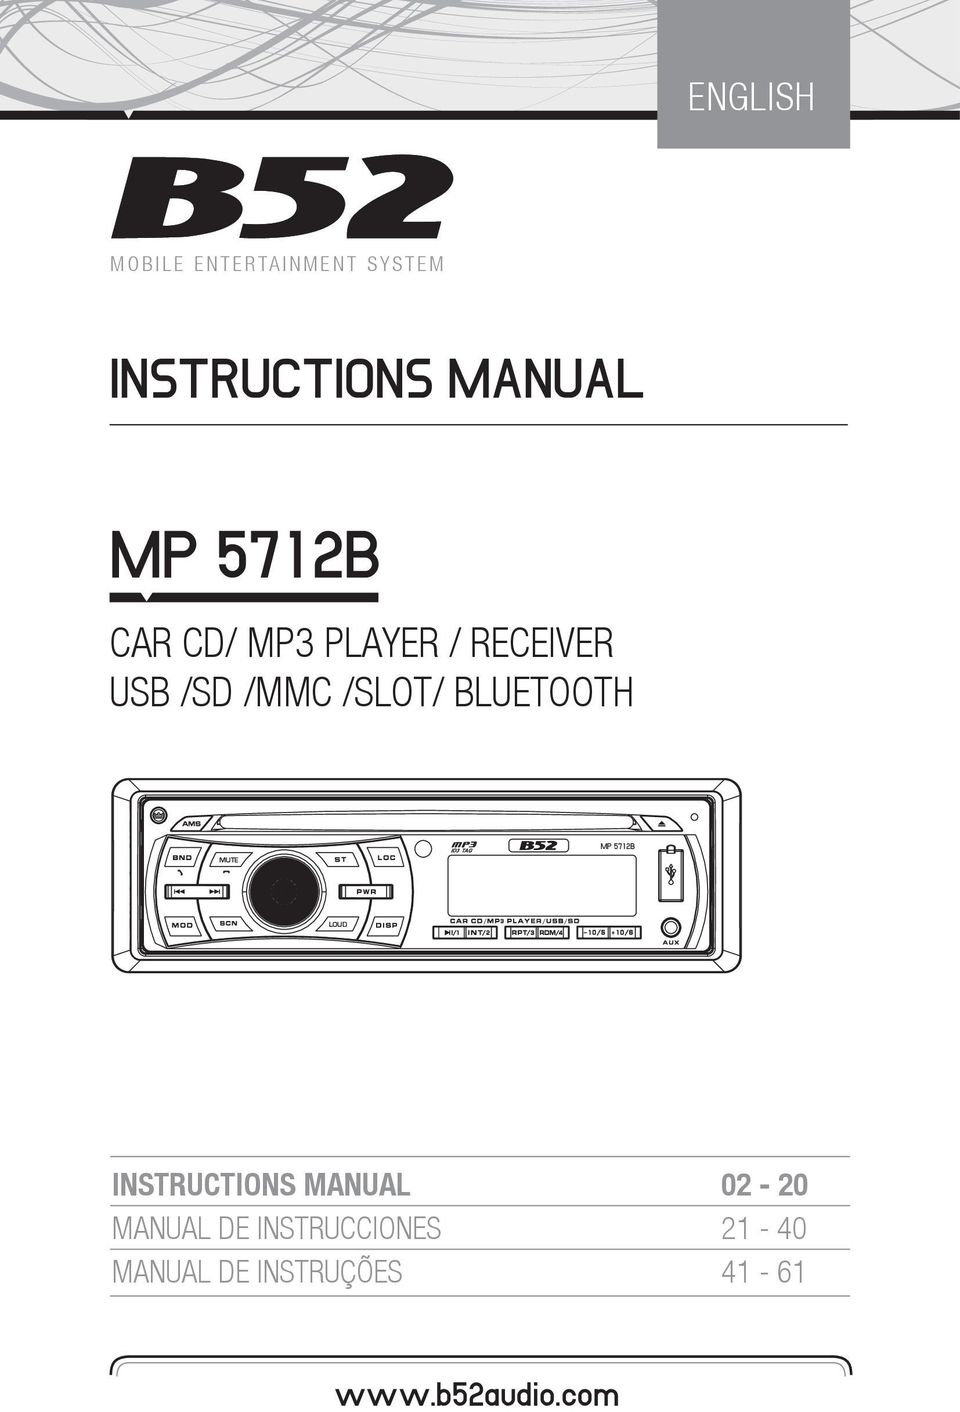 BLUETOOTH MUTE MP 5712B LOUD INSTRUCTIONS MANUAL 02-20